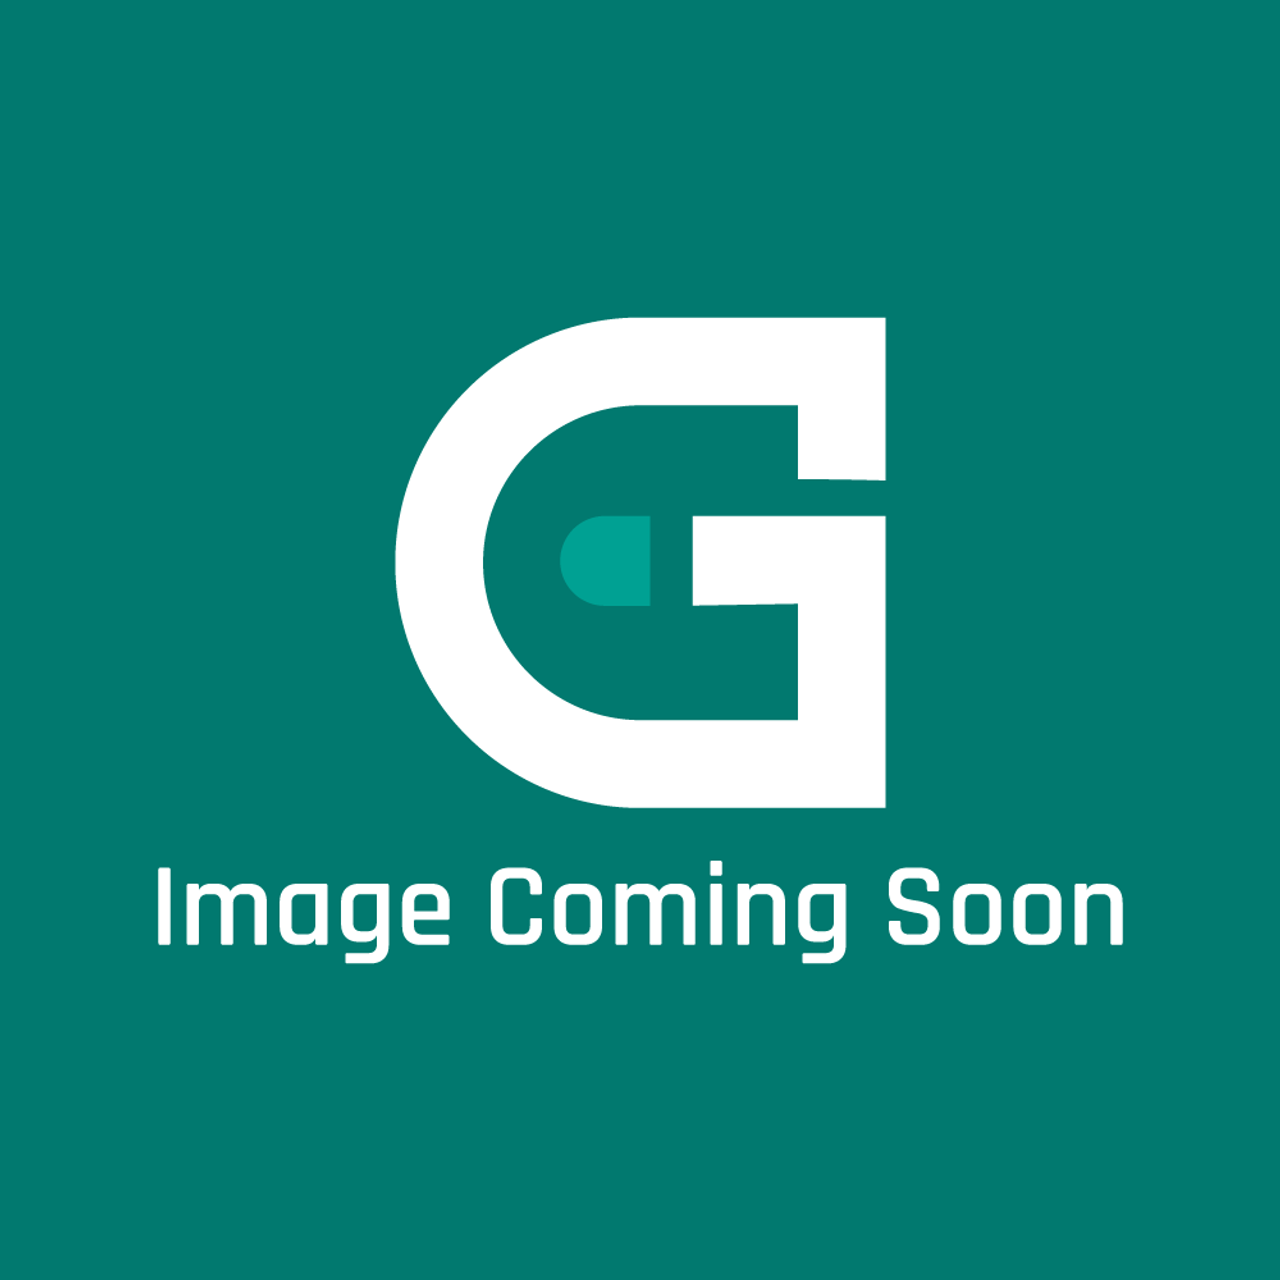 AGA Marvel A4577 - Hobframe & Ceramic Ffd 2 Brn - Image Coming Soon!